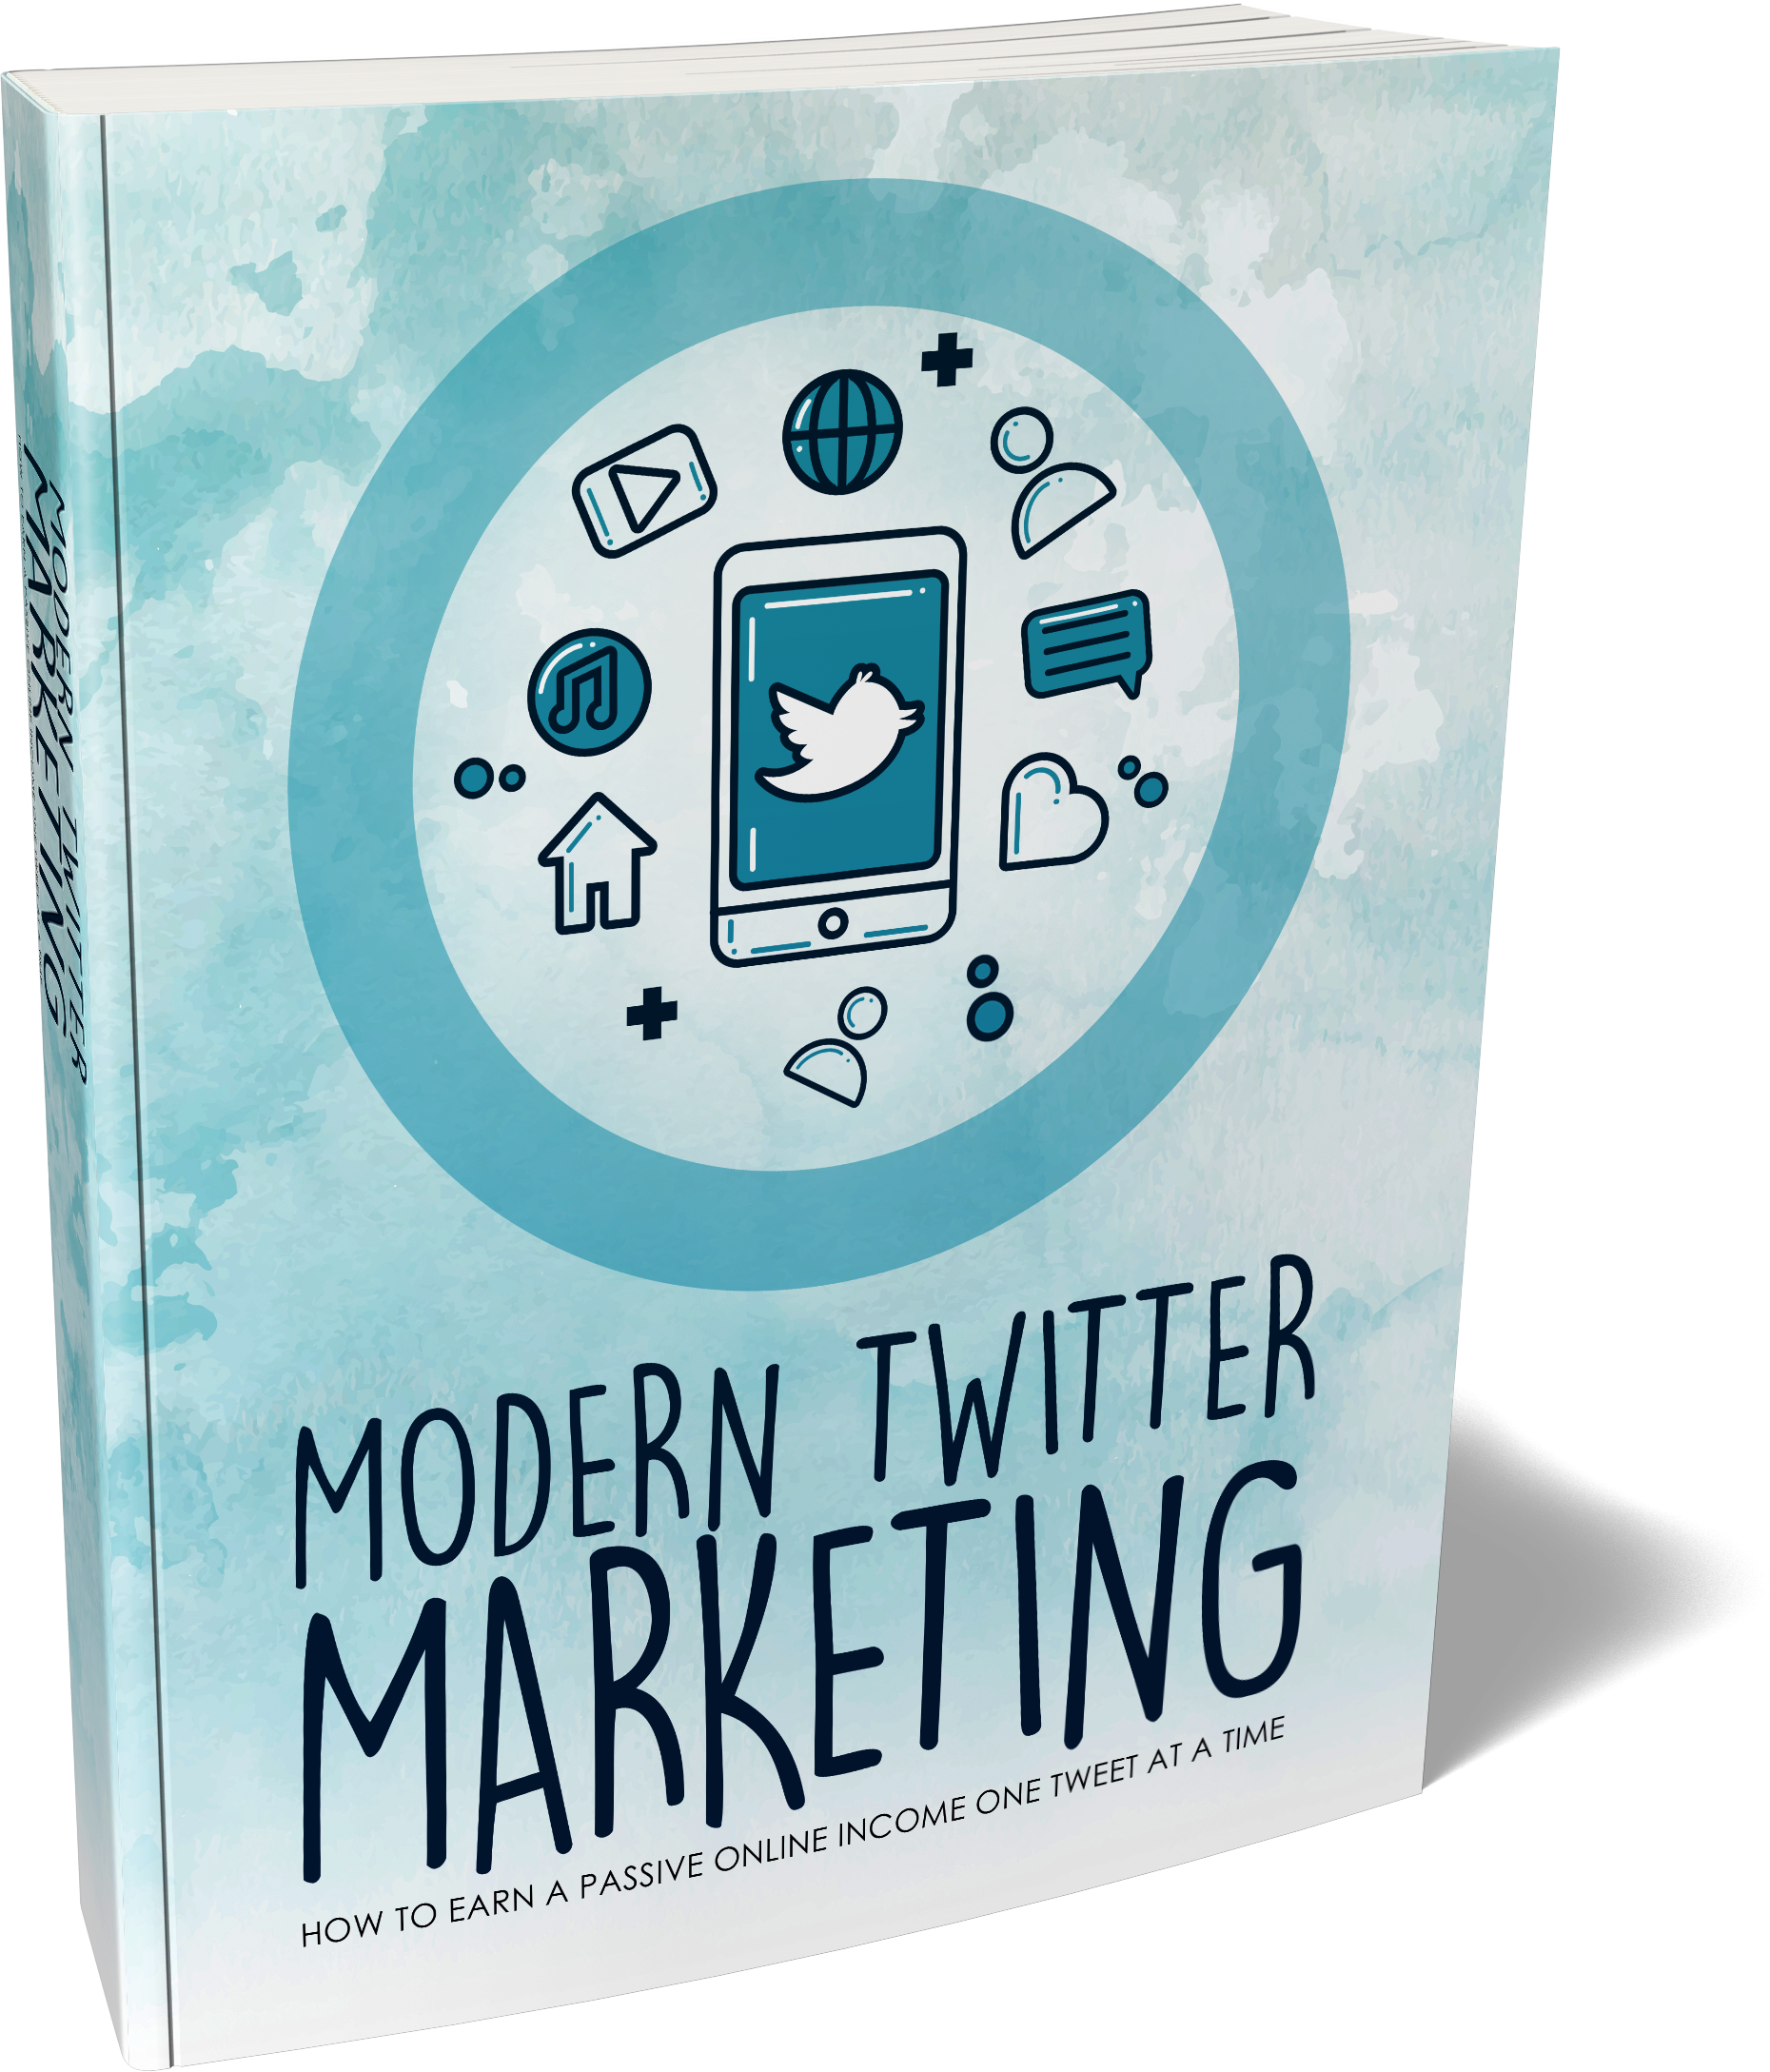 Modern Twitter Marketing 2021 Training Guide image